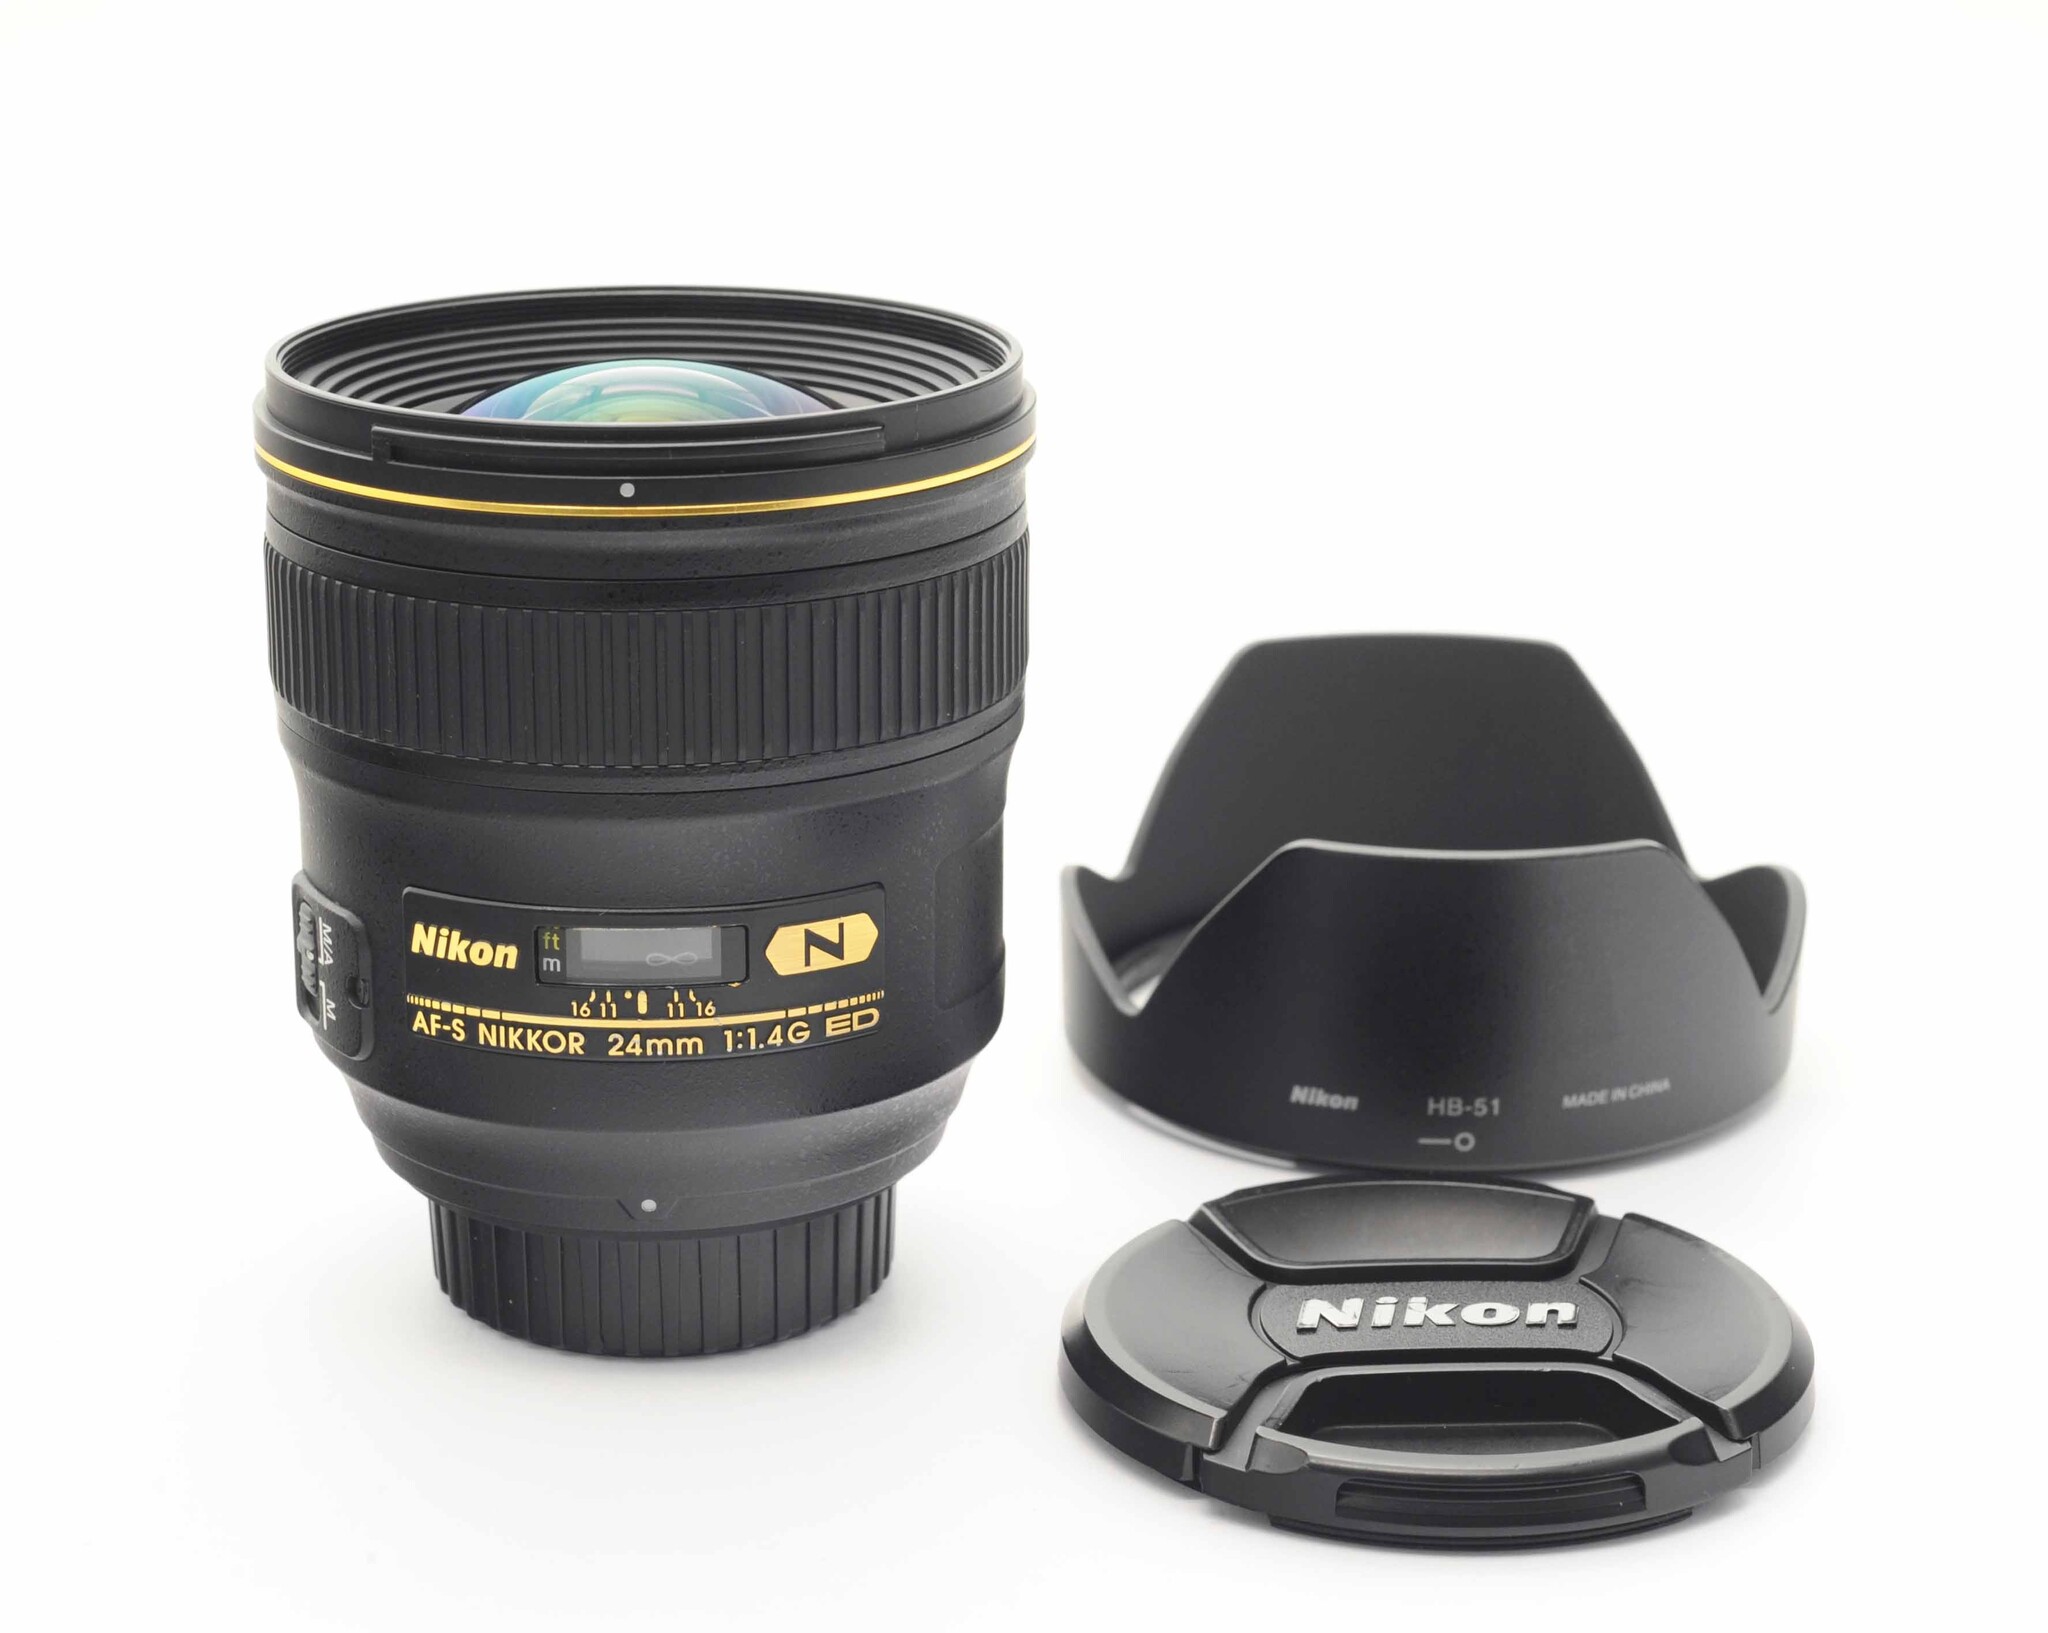 Nikon 単焦点レンズ AF-S NIKKOR 24mm f/1.4G ED査定評価はABでした 